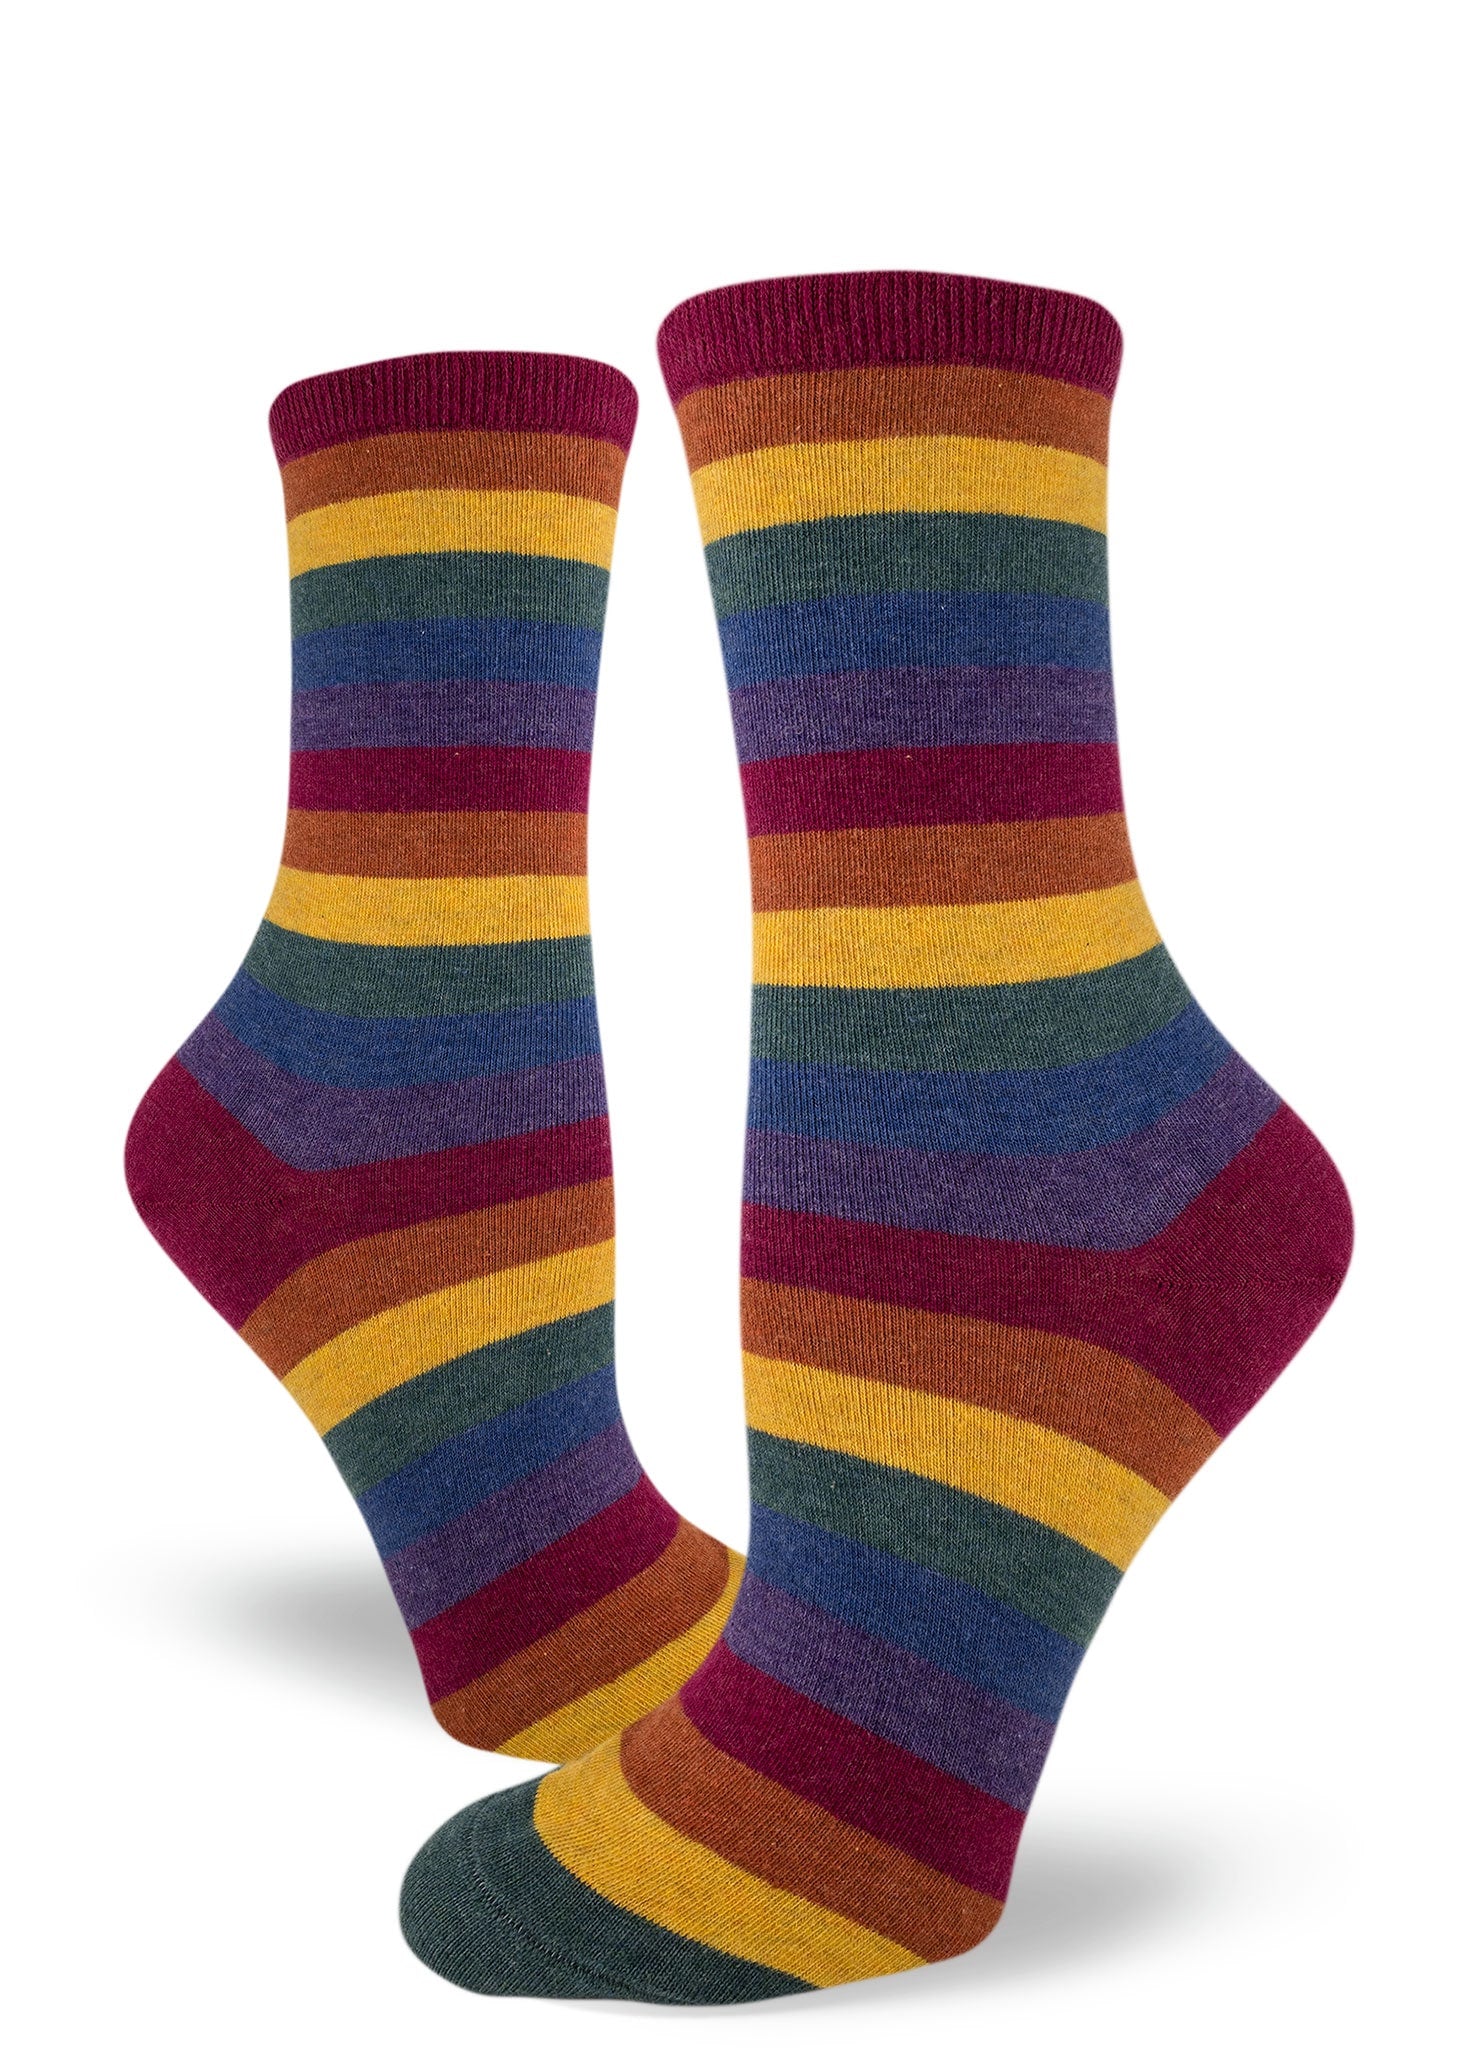 Heather Rainbow Striped Crew Socks - Muted Rainbow